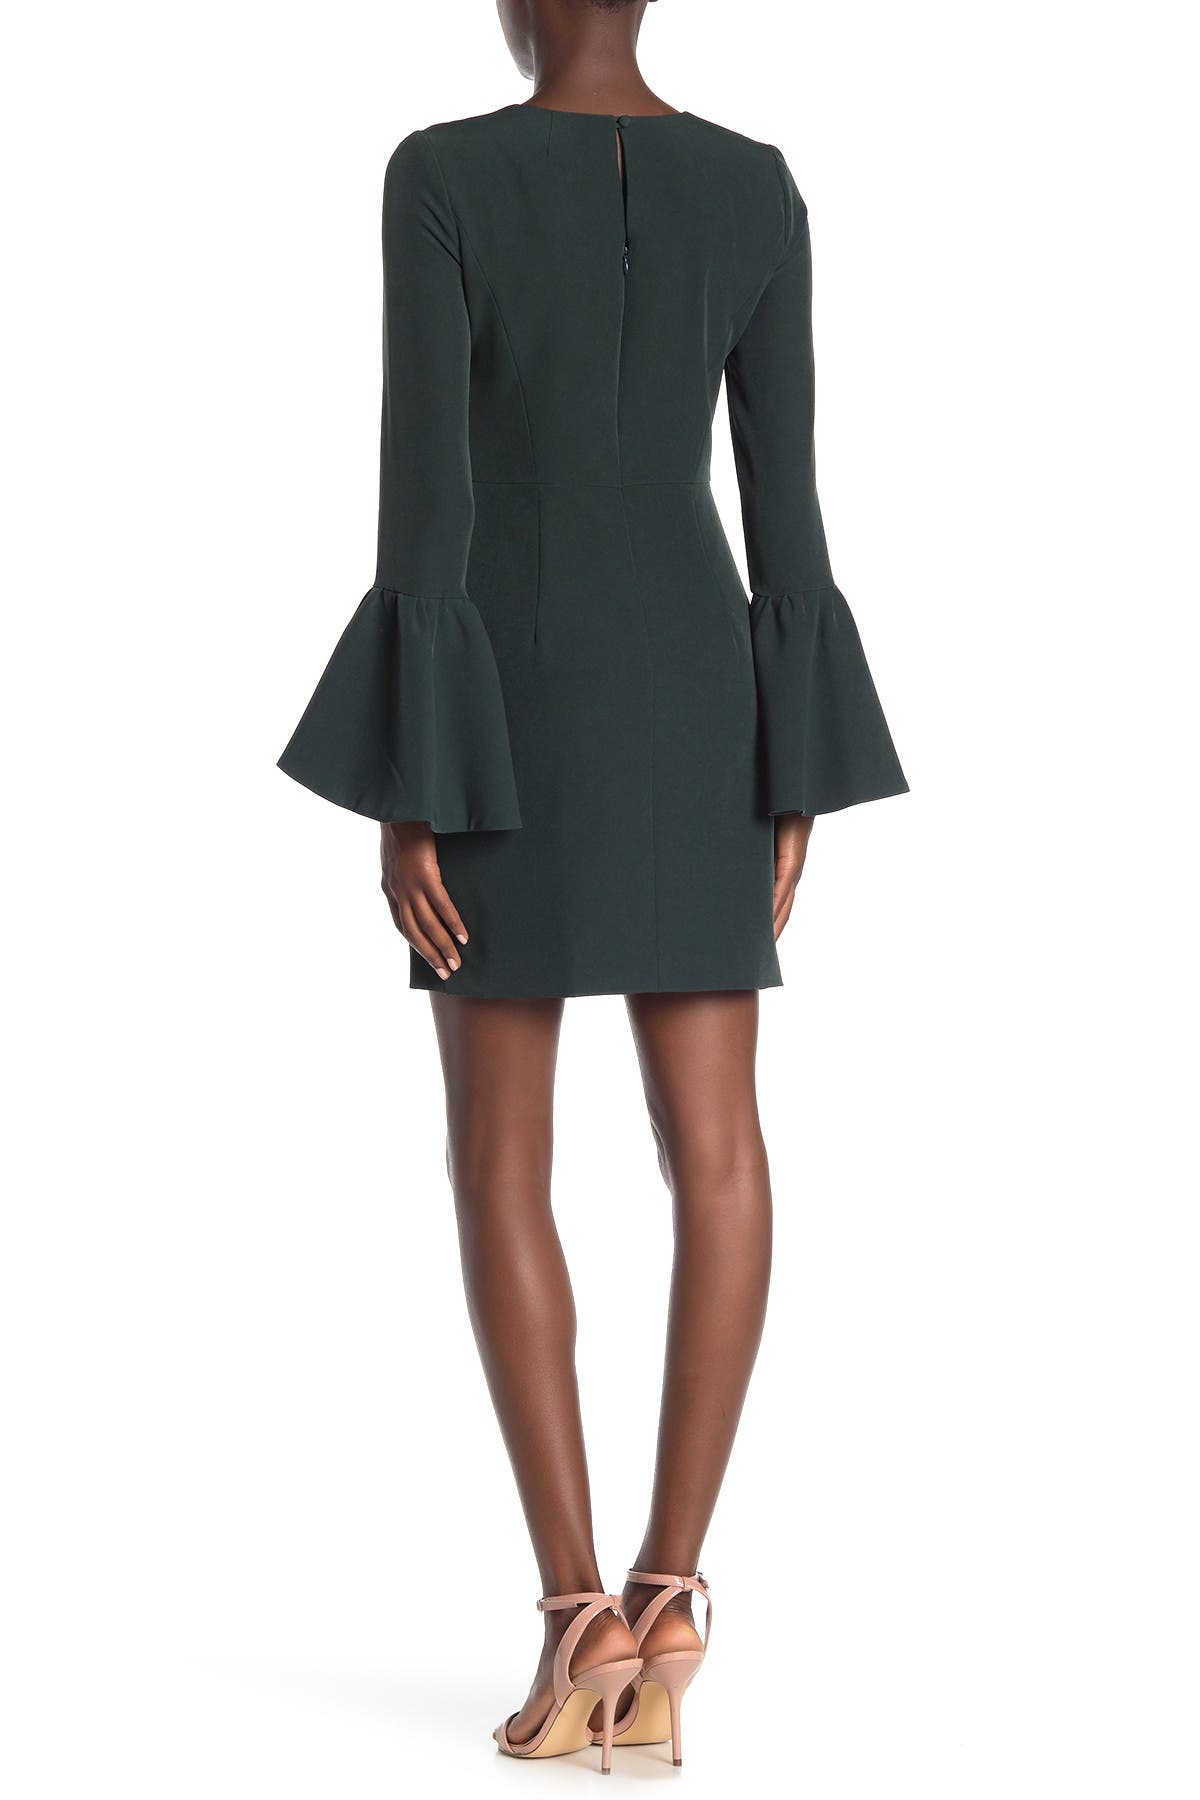 MILLY | Morgan Italian Cady Bell Sleeve Mini Dress | Nordstrom Rack